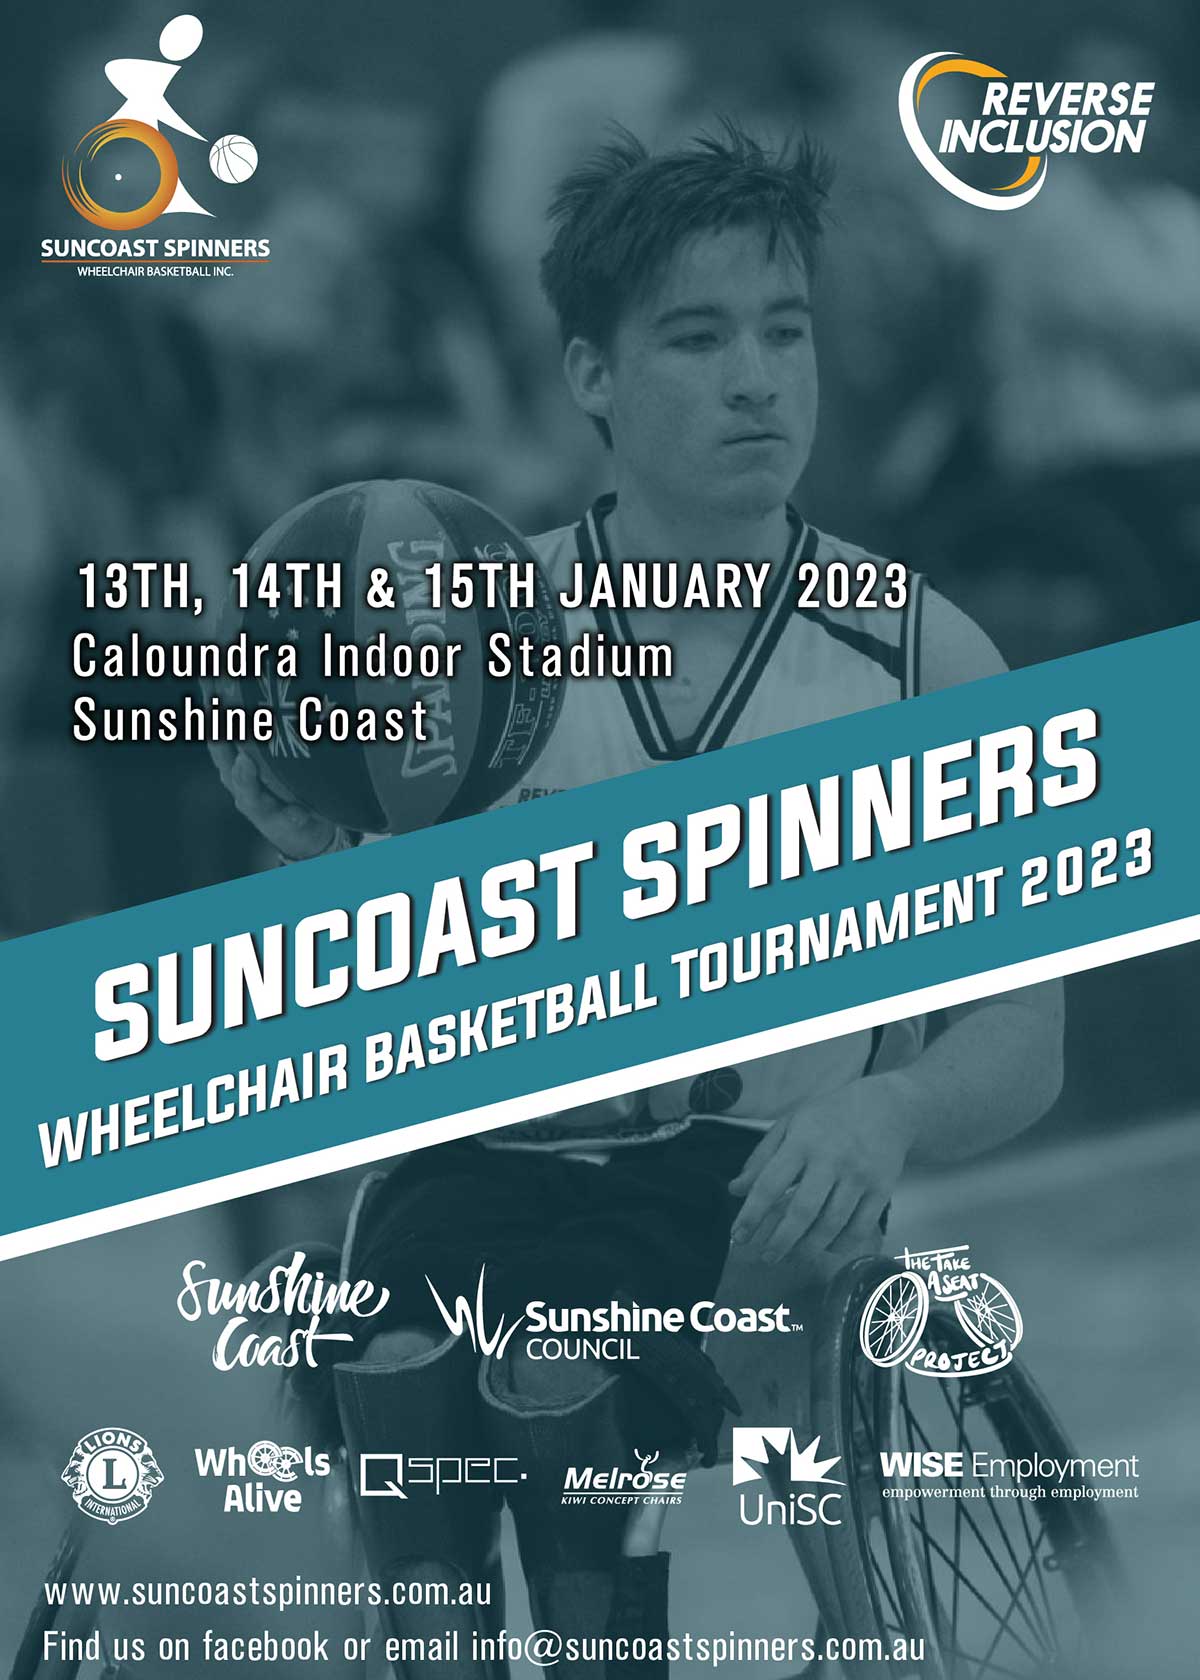 Suncoast Spinners Wheelchair Basketball Tournament Flyer 2023